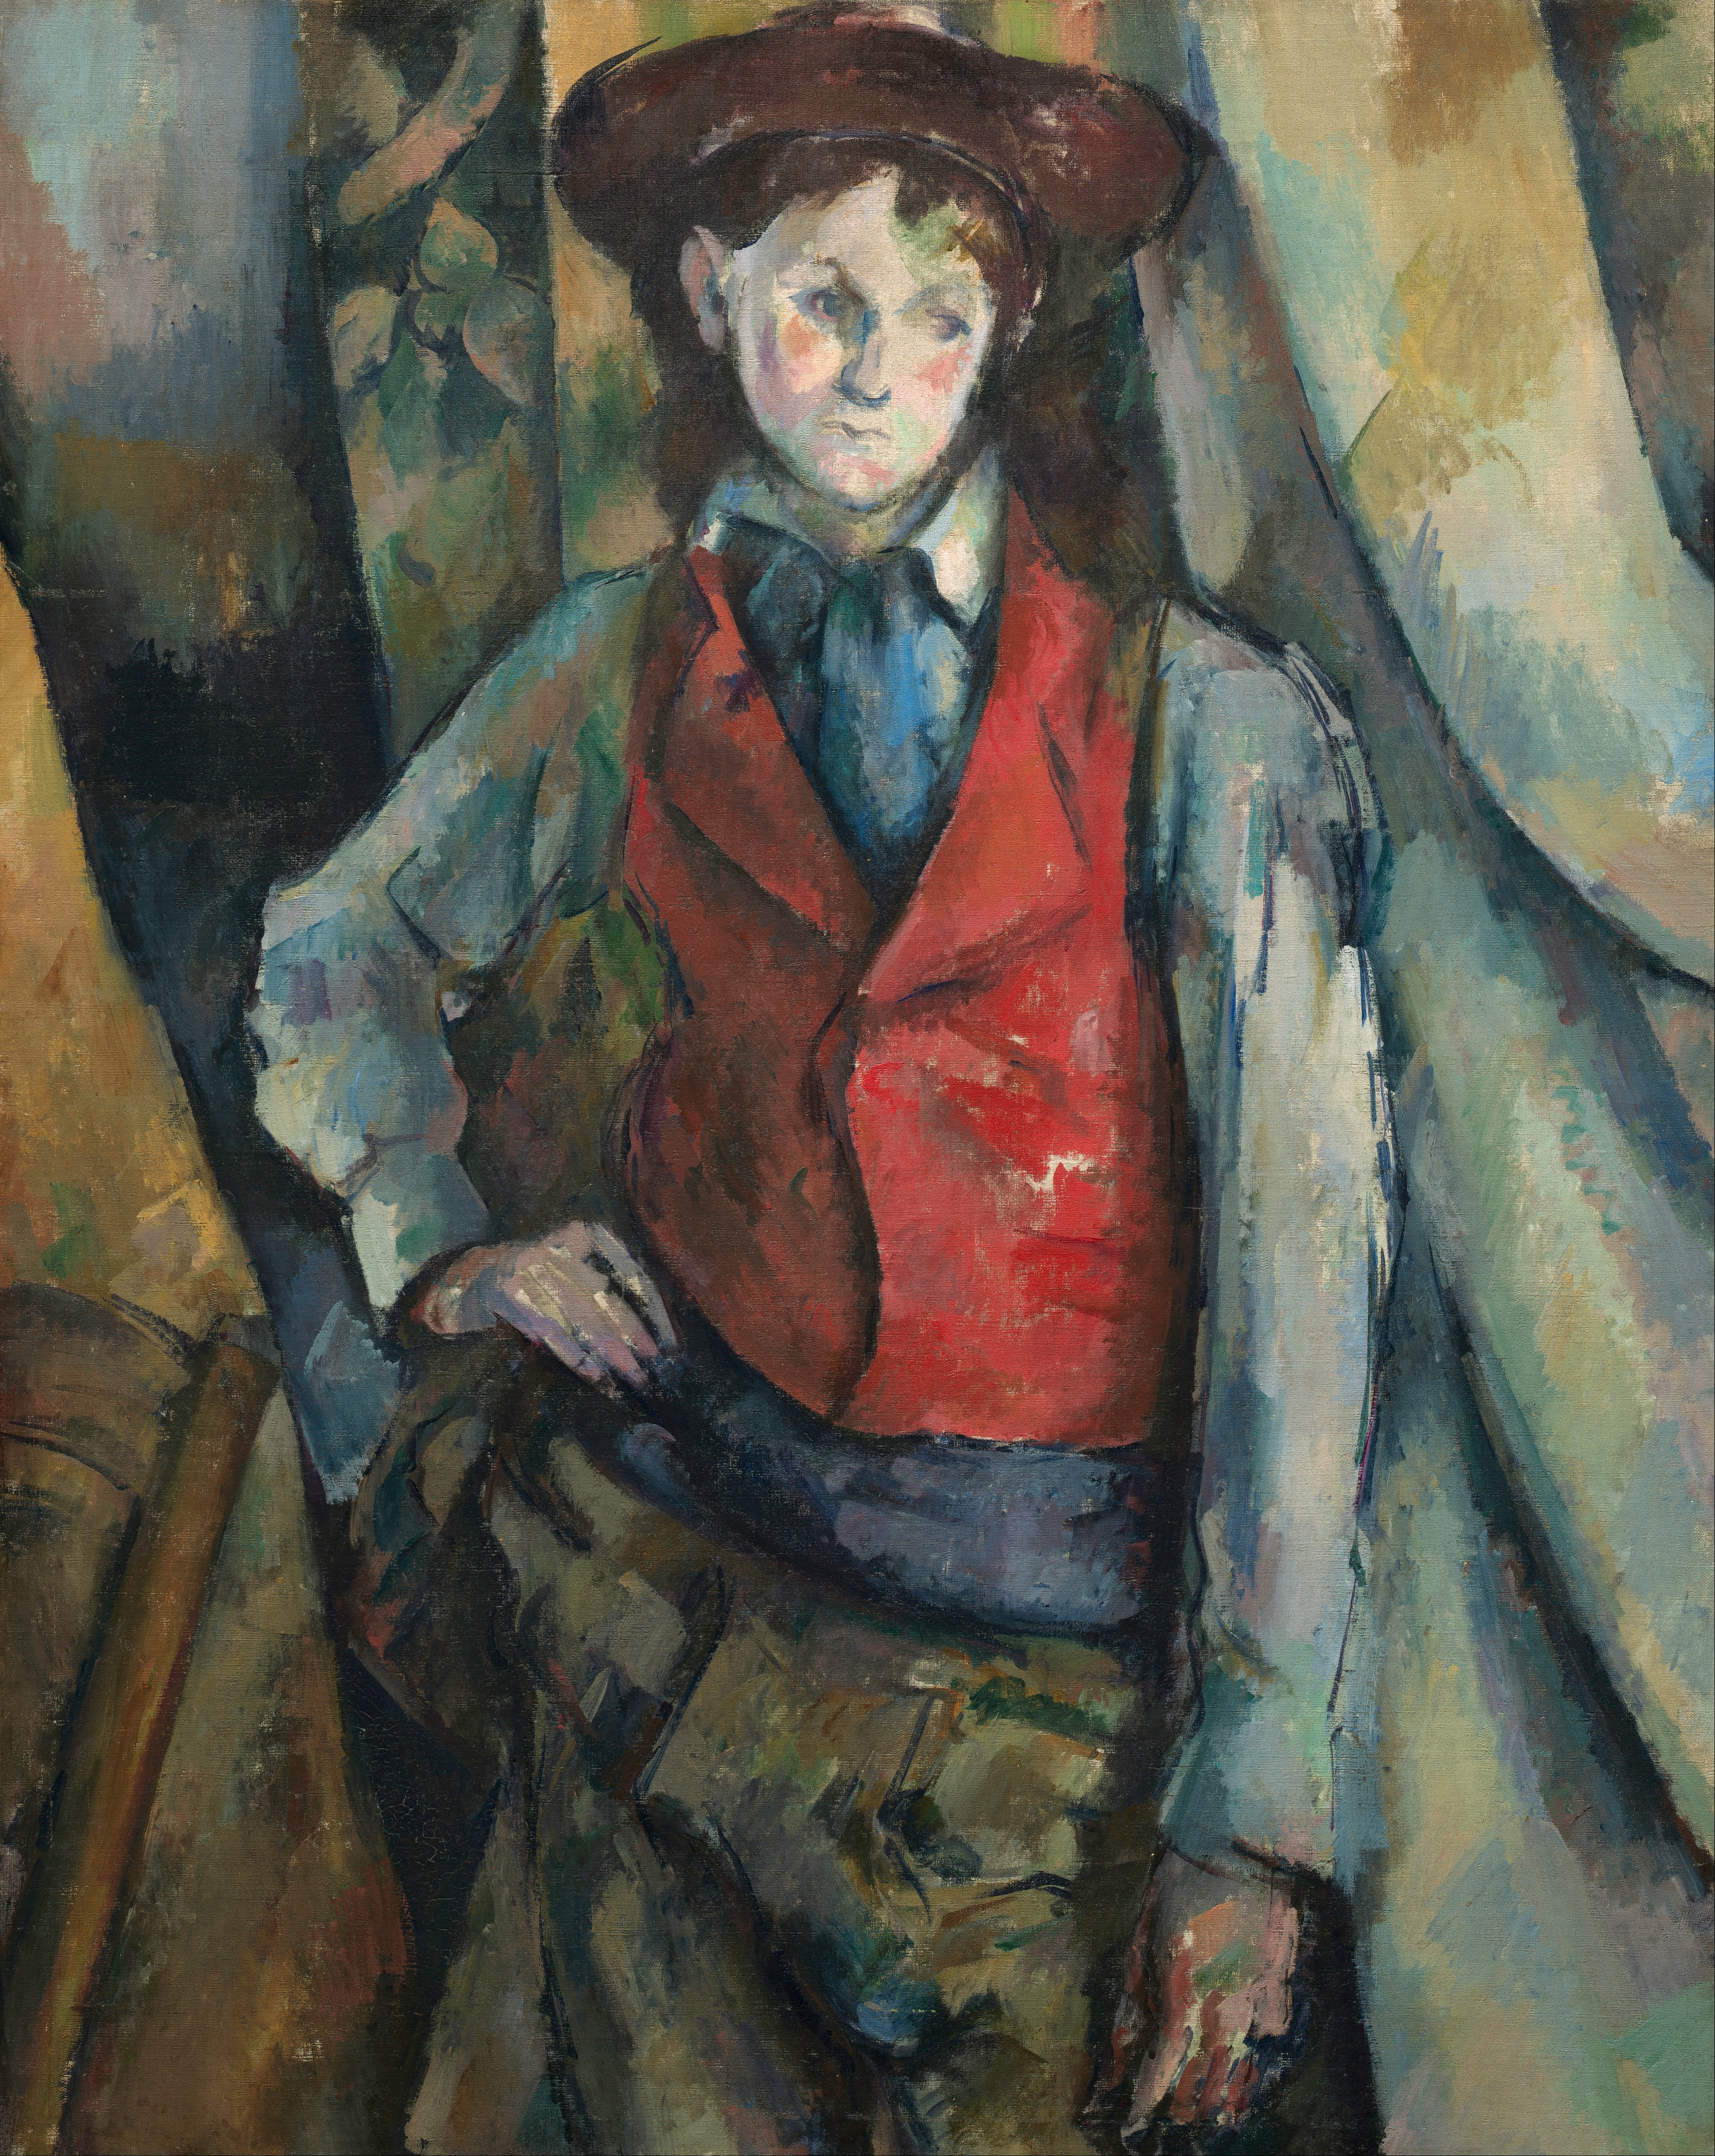 Boy in a Red Waistcoat by Paul Cézanne - 1888-1890 - 89.5 x 72.4 cm National Gallery of Art